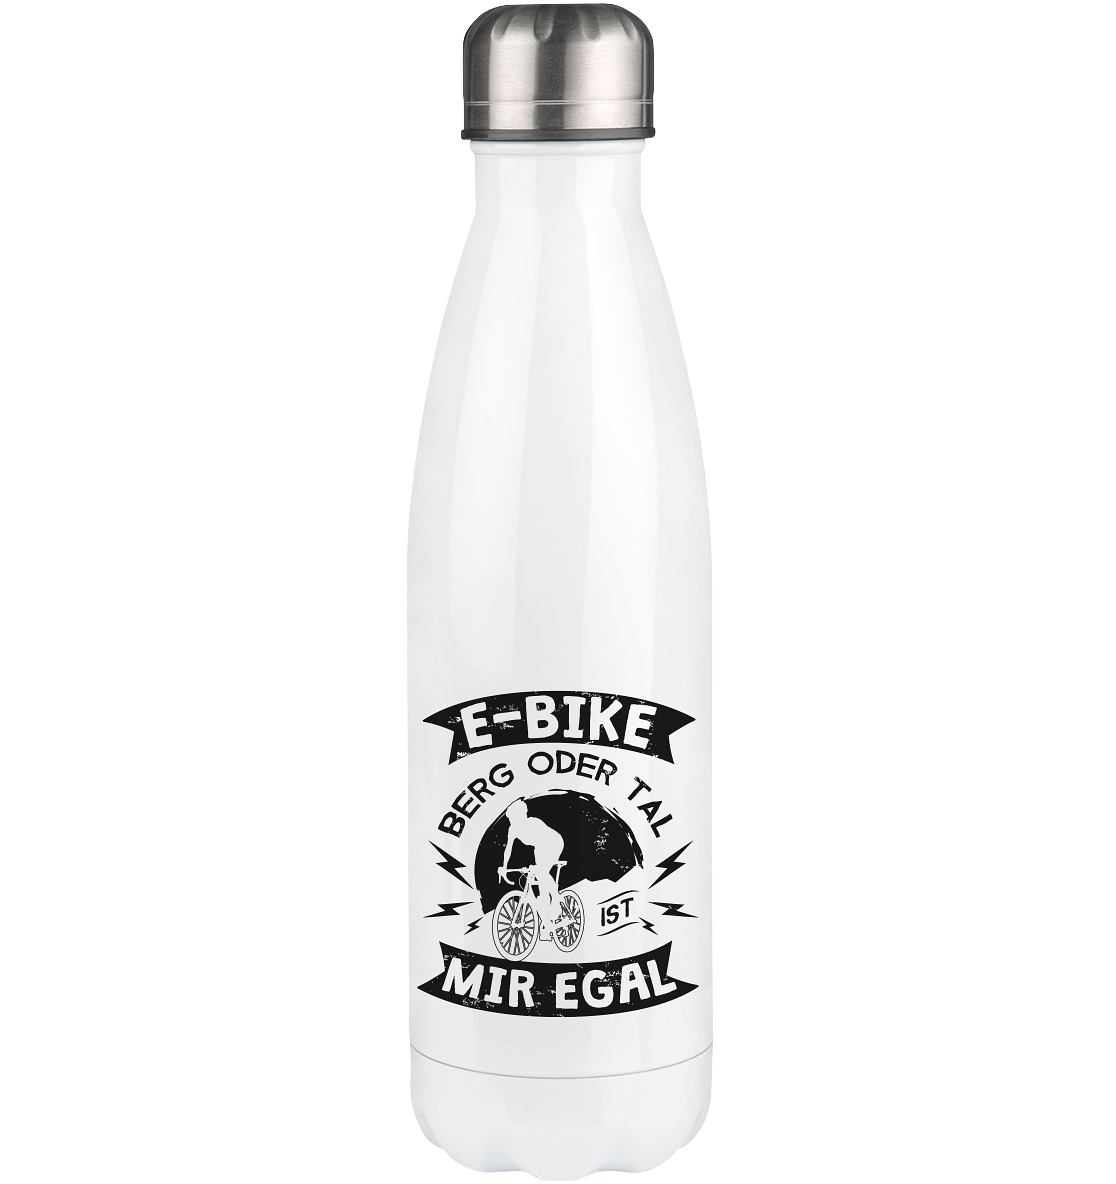 E-Bike - Berg oder Tal, mir egal - Edelstahl Thermosflasche e-bike 500ml